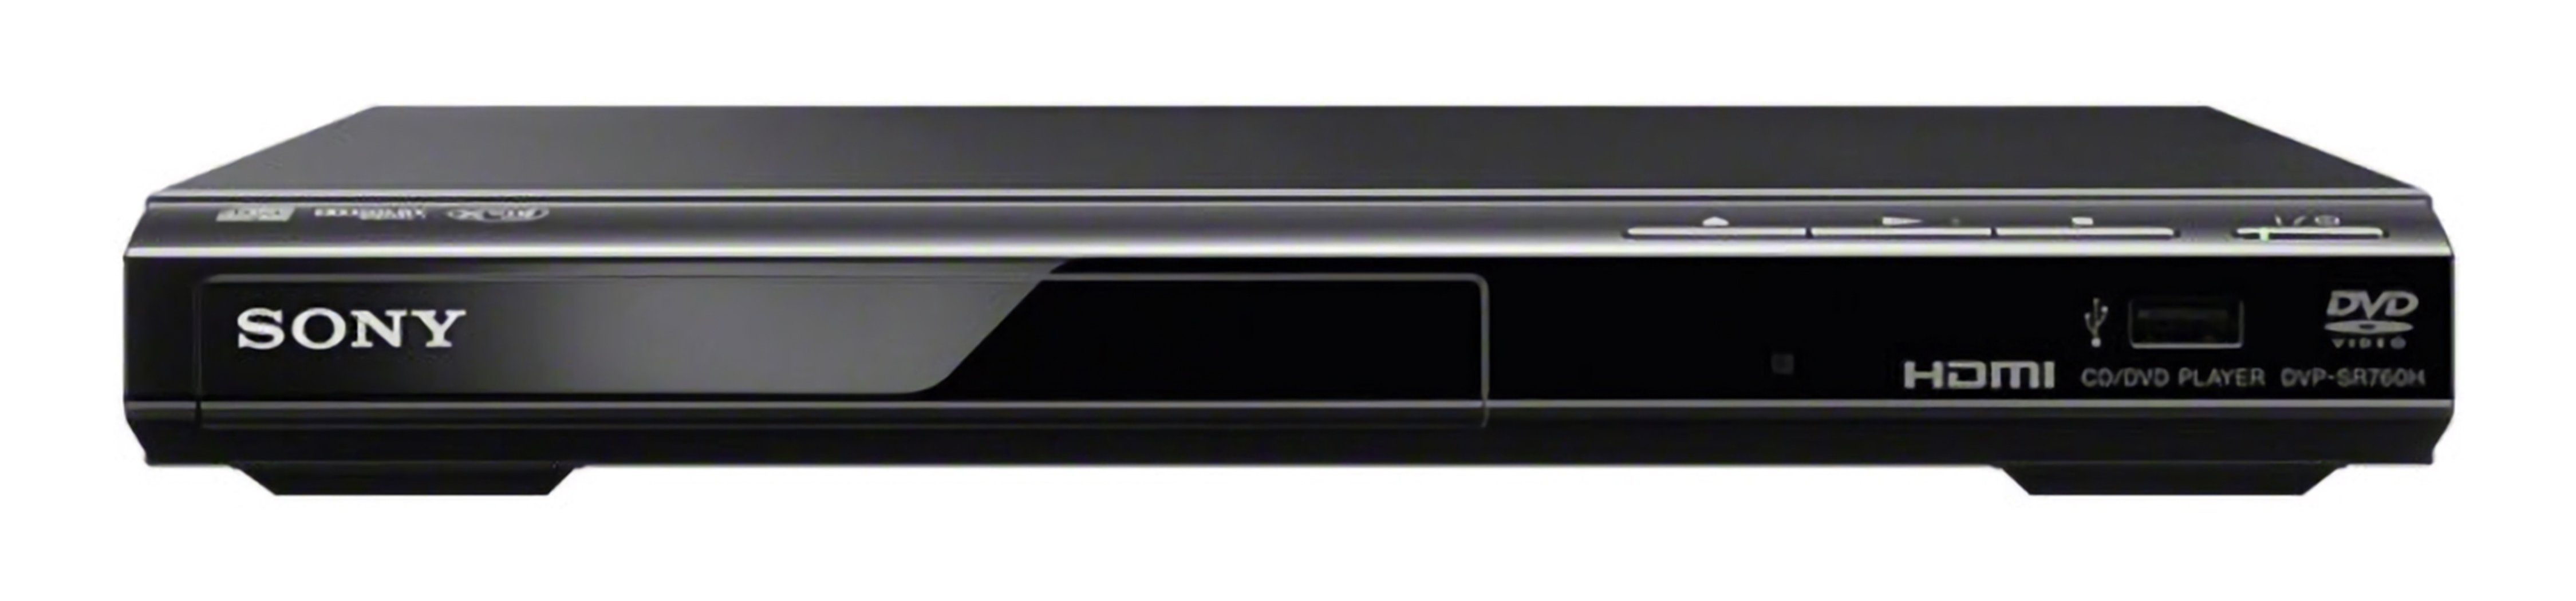 Sony DVP-SR760H DVD-Player HD) (Full